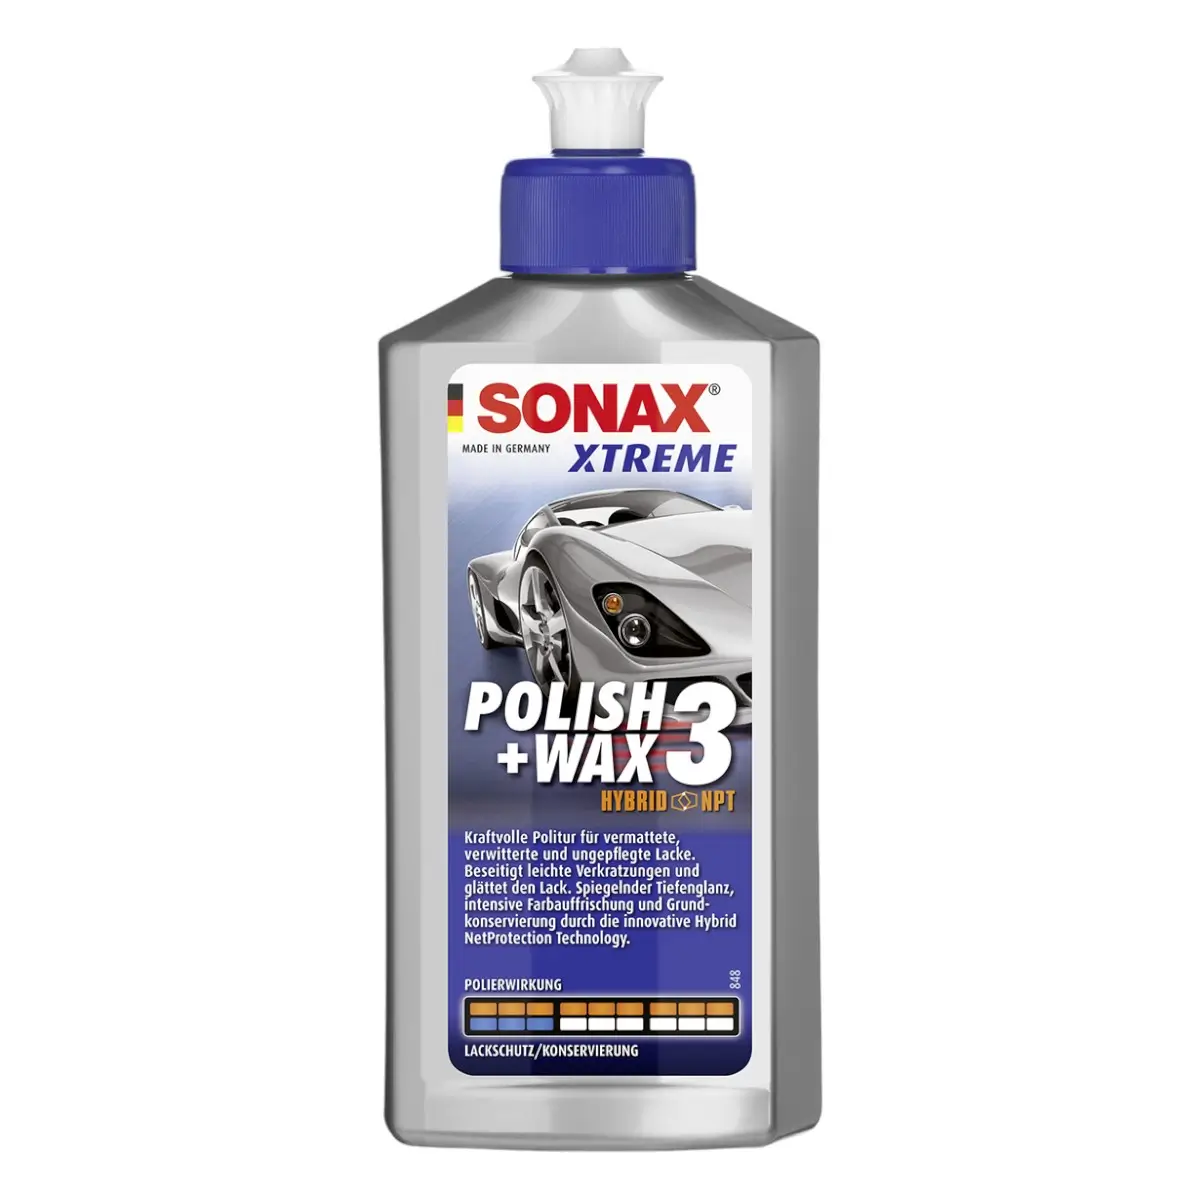 Sonax Xtreme Polish+Wax 3 Hybrid NPT